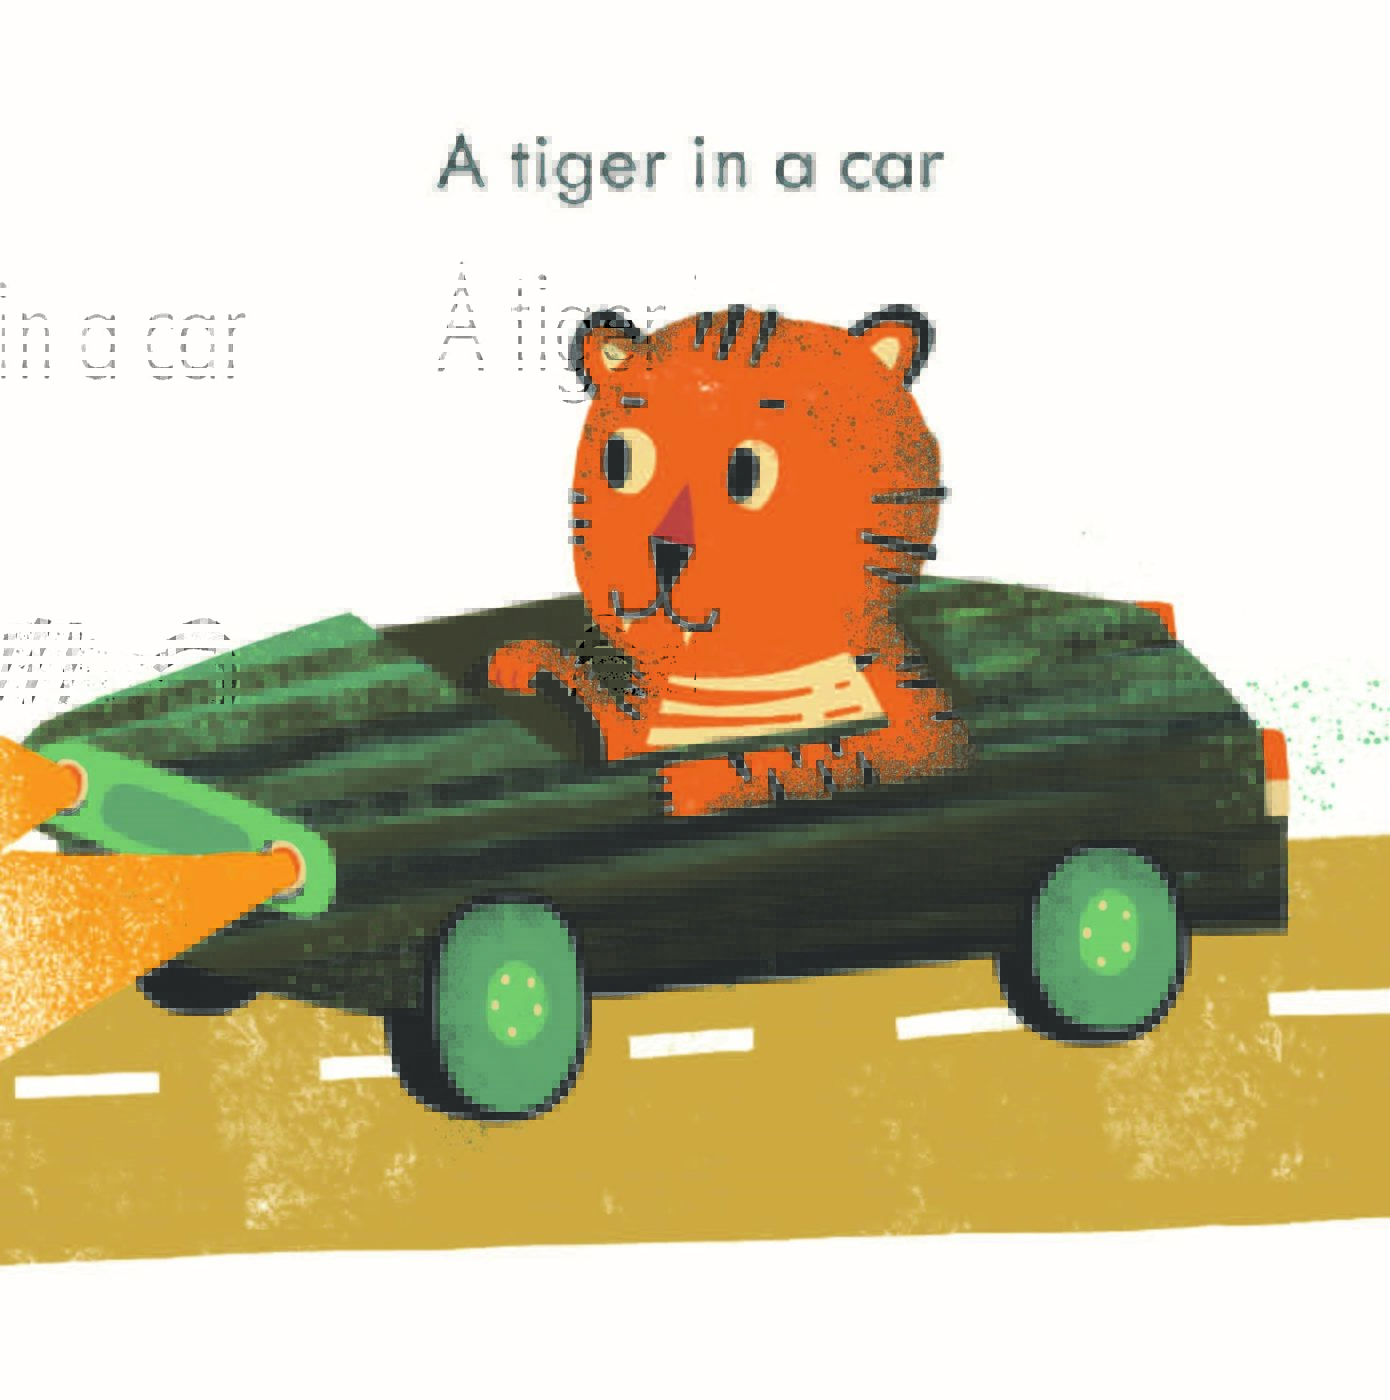 An orange tiger in a green sports car.